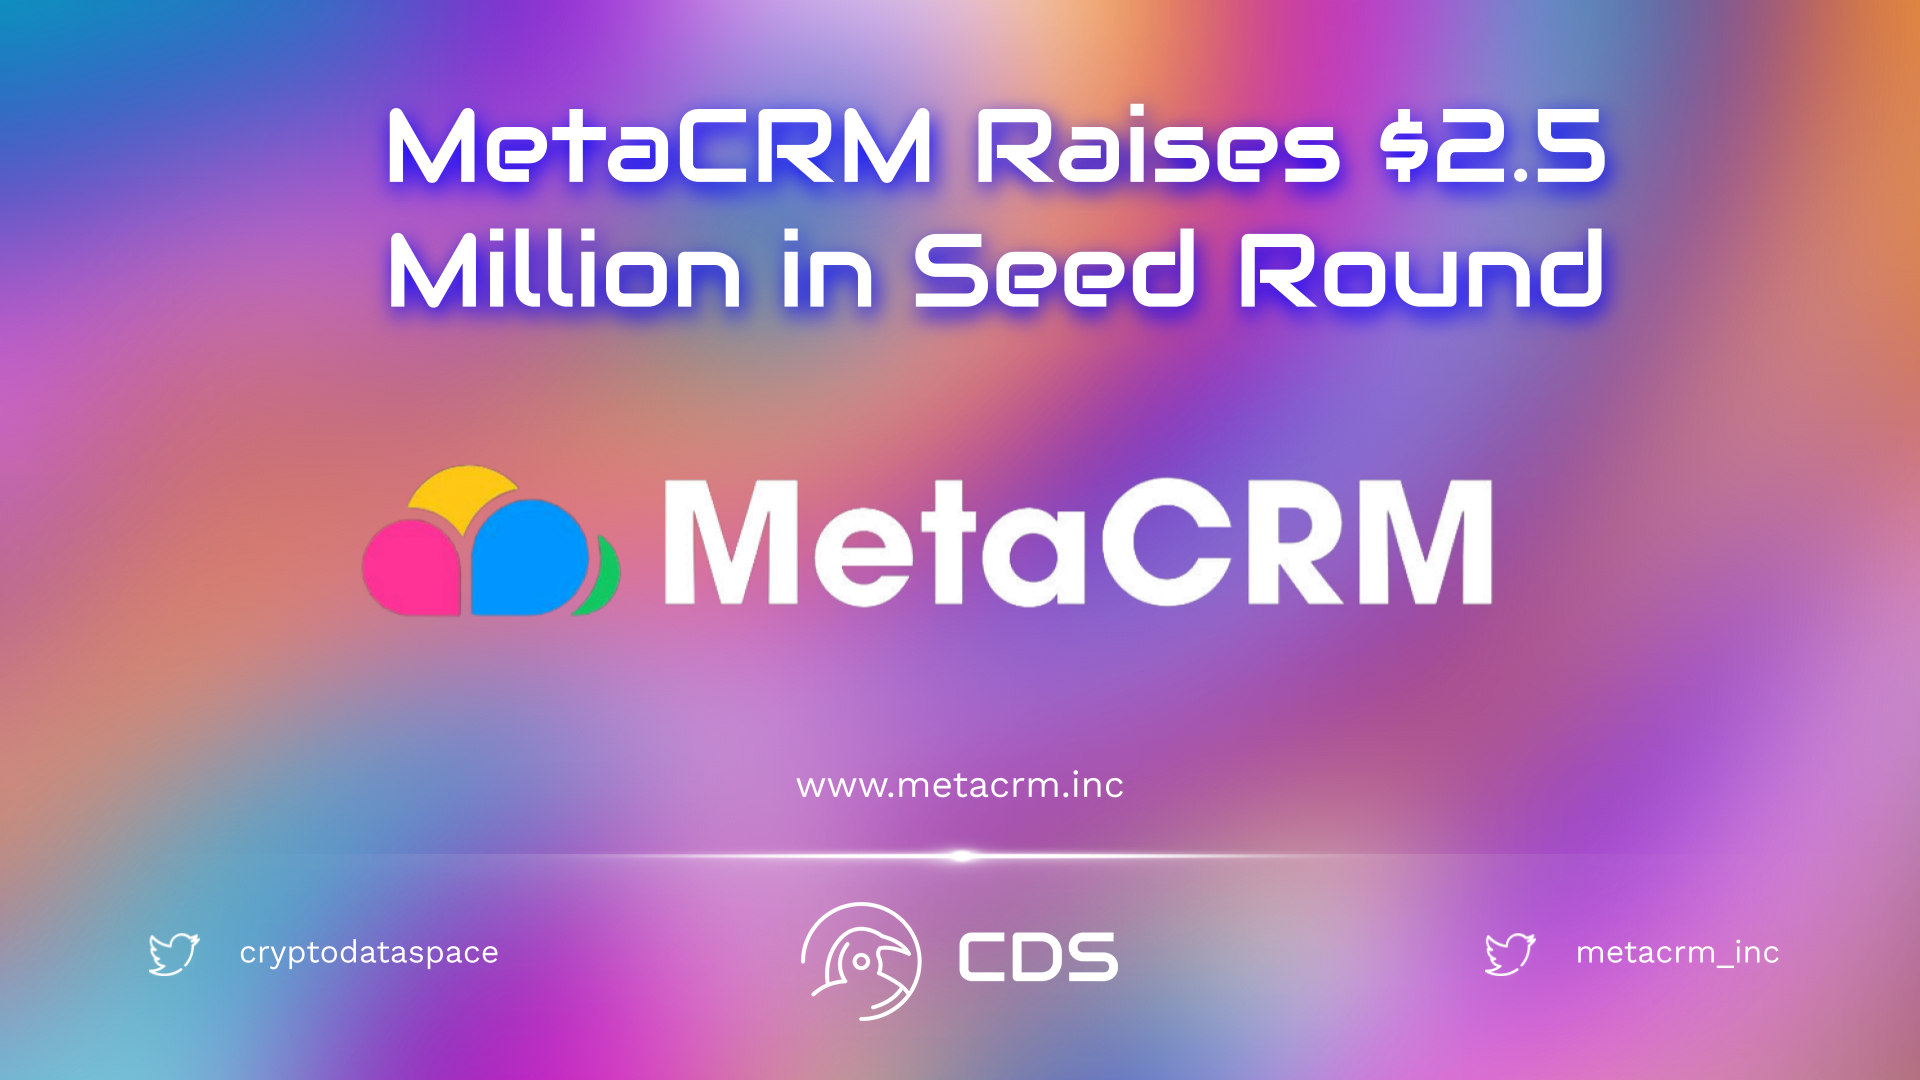 MetaCRM Raises $2.5 Million in Seed Round